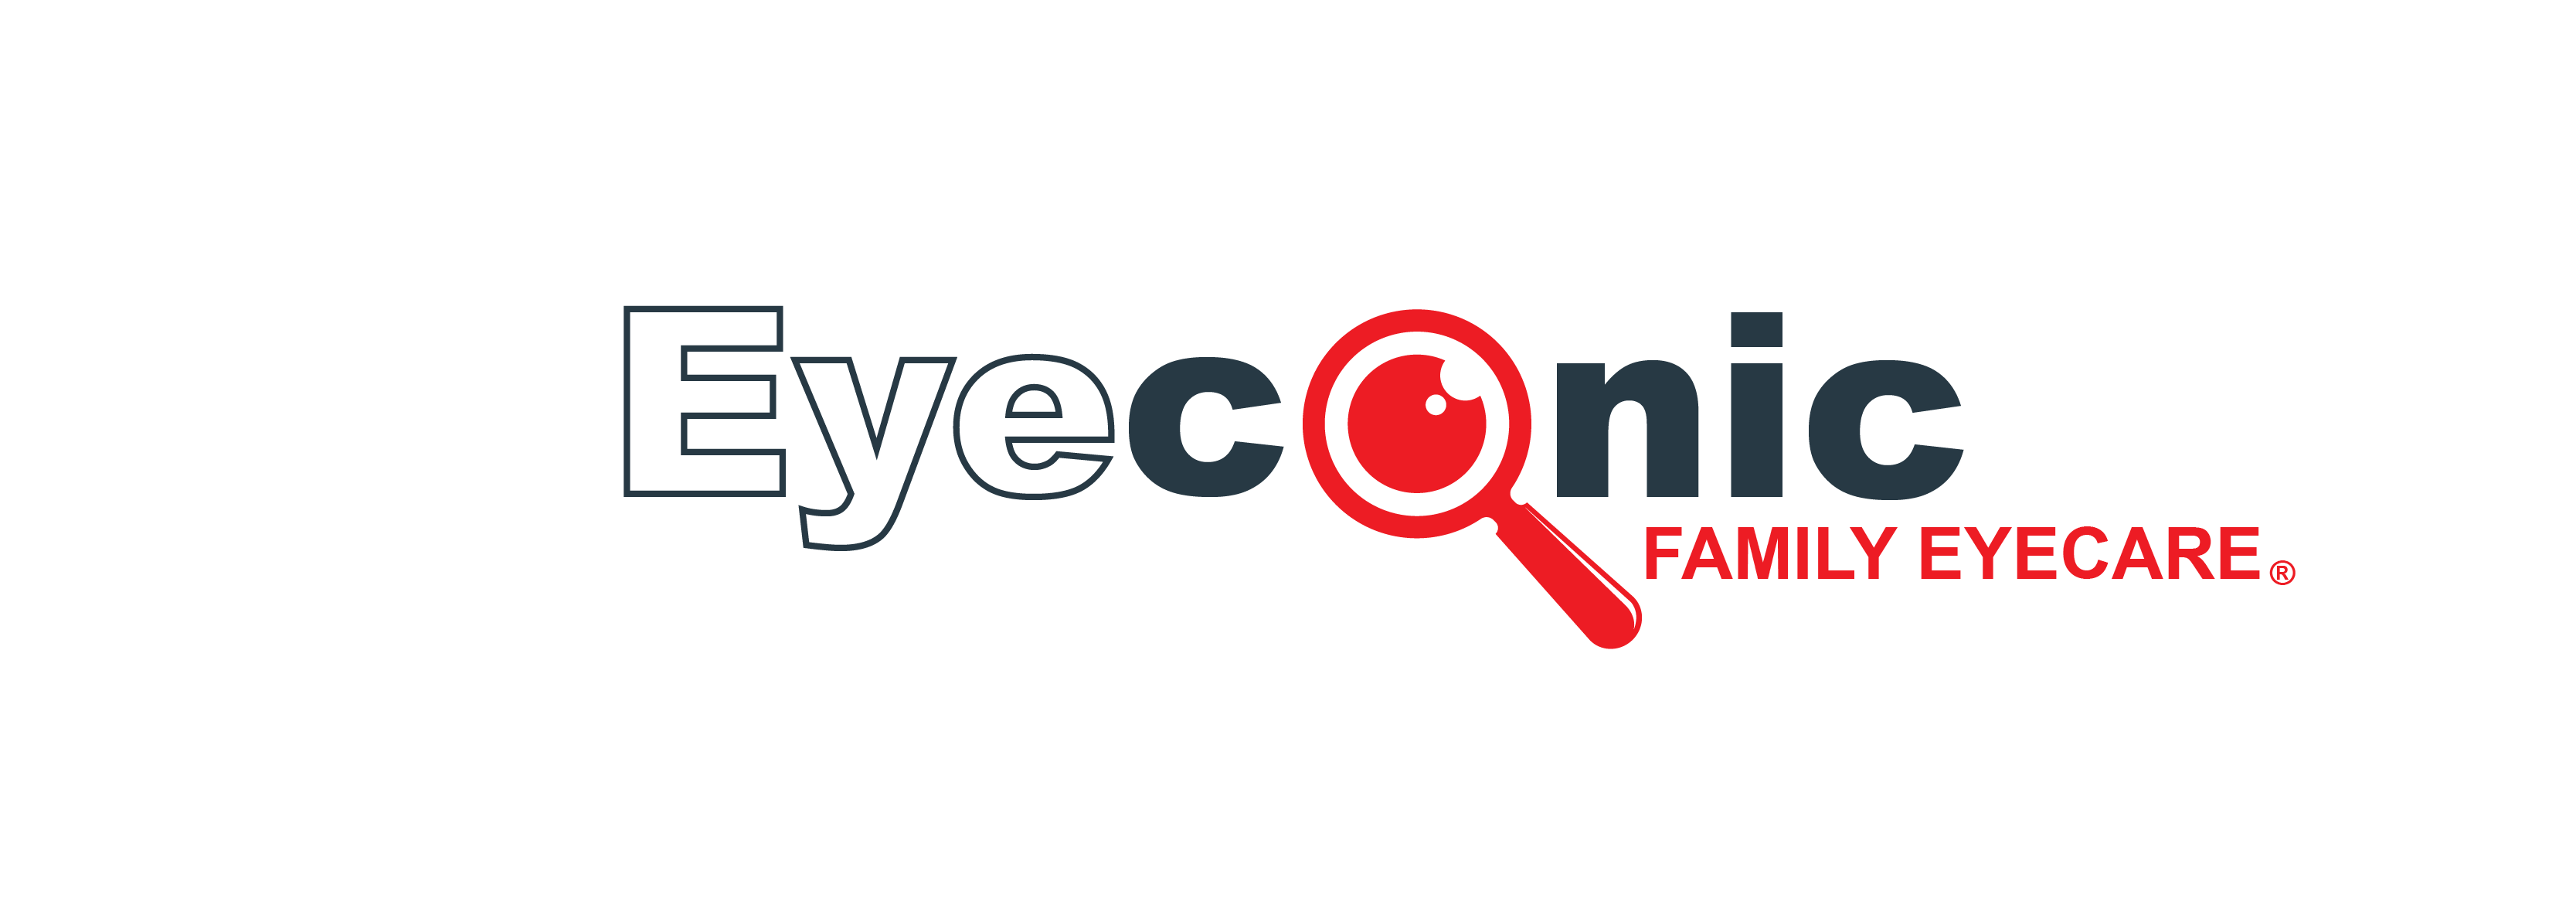 Eyeconic Family Eyecare